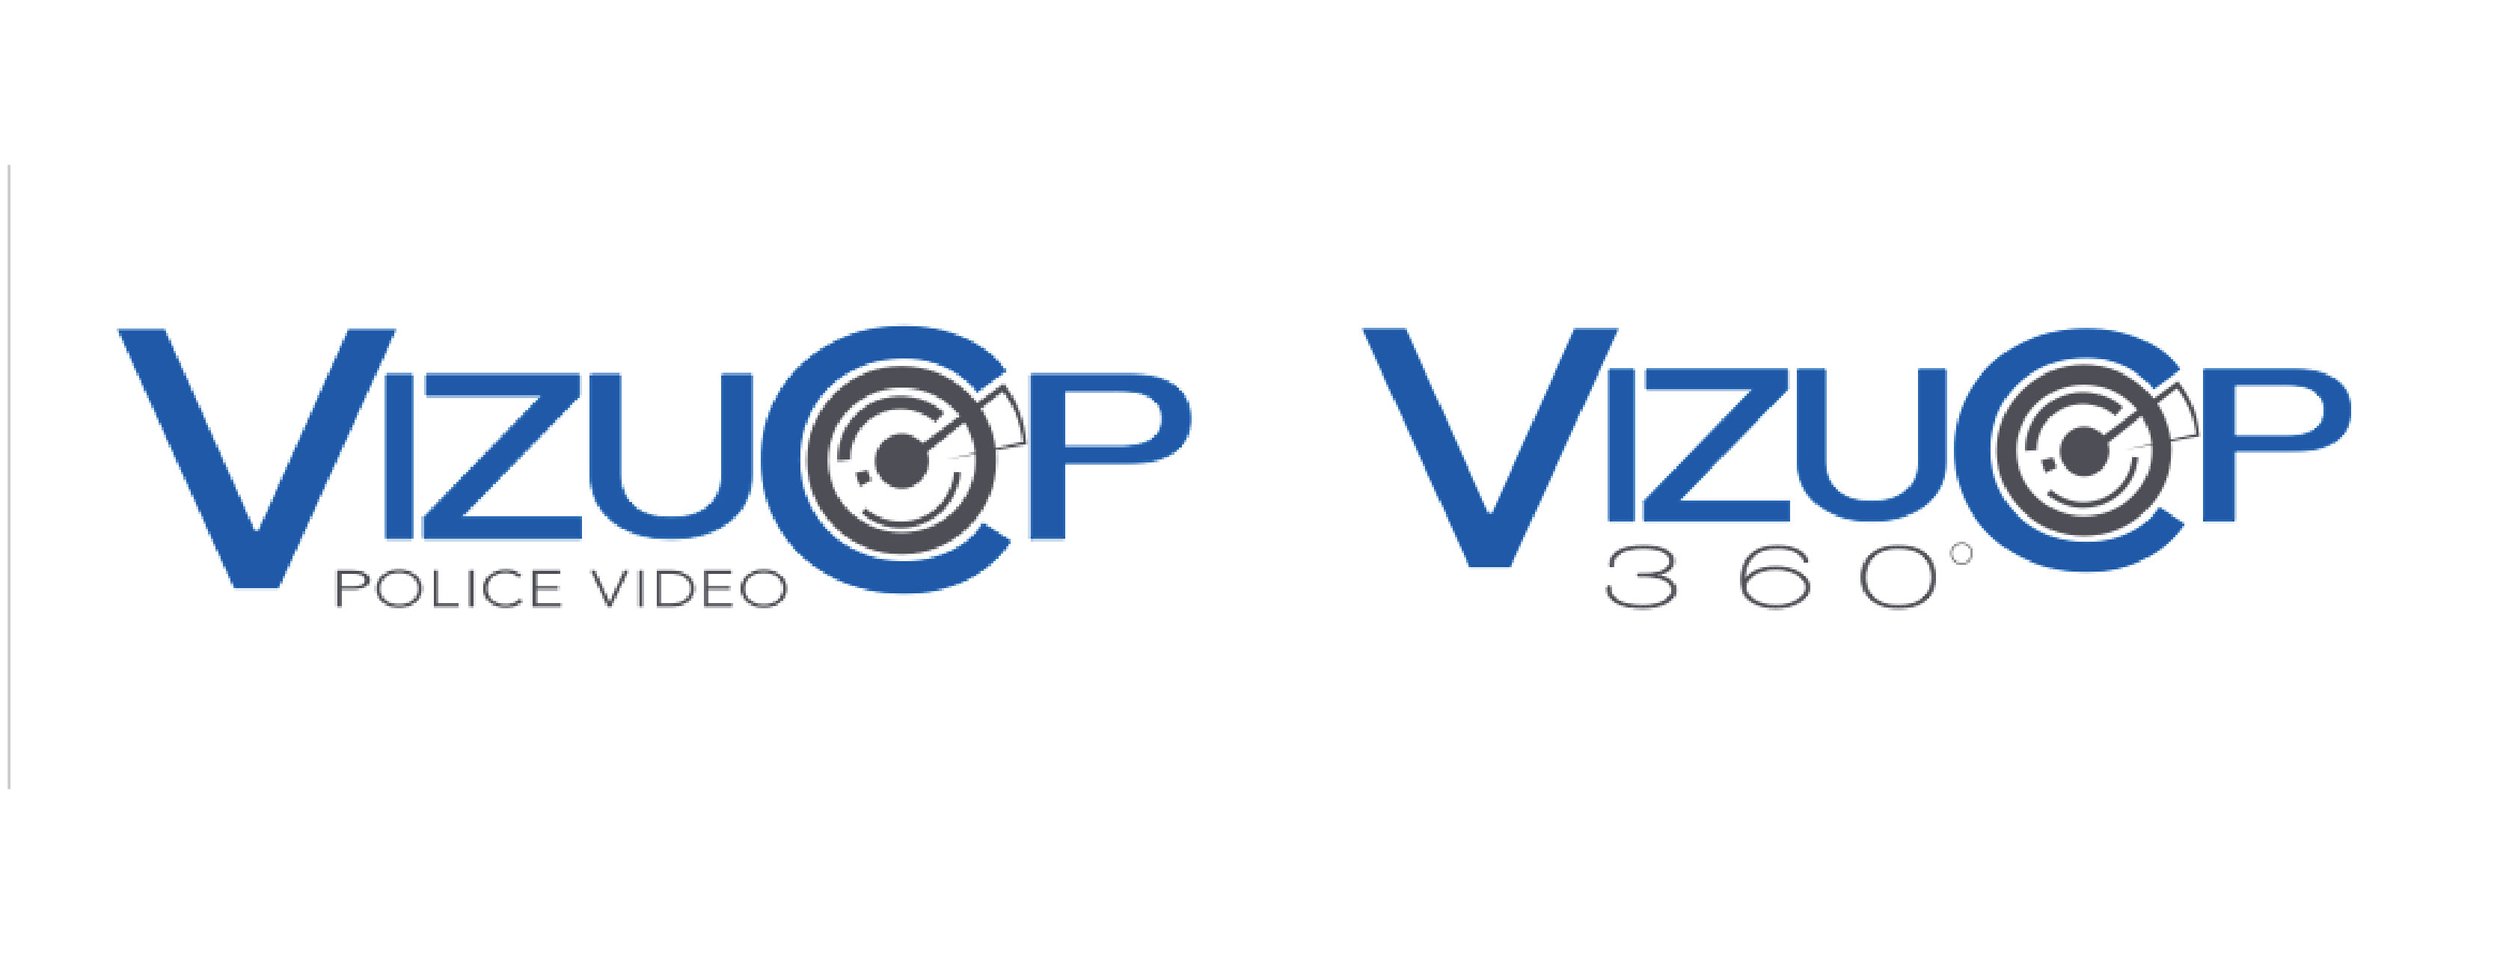 VizuCop-logo-GraphicWebsite-02.jpg